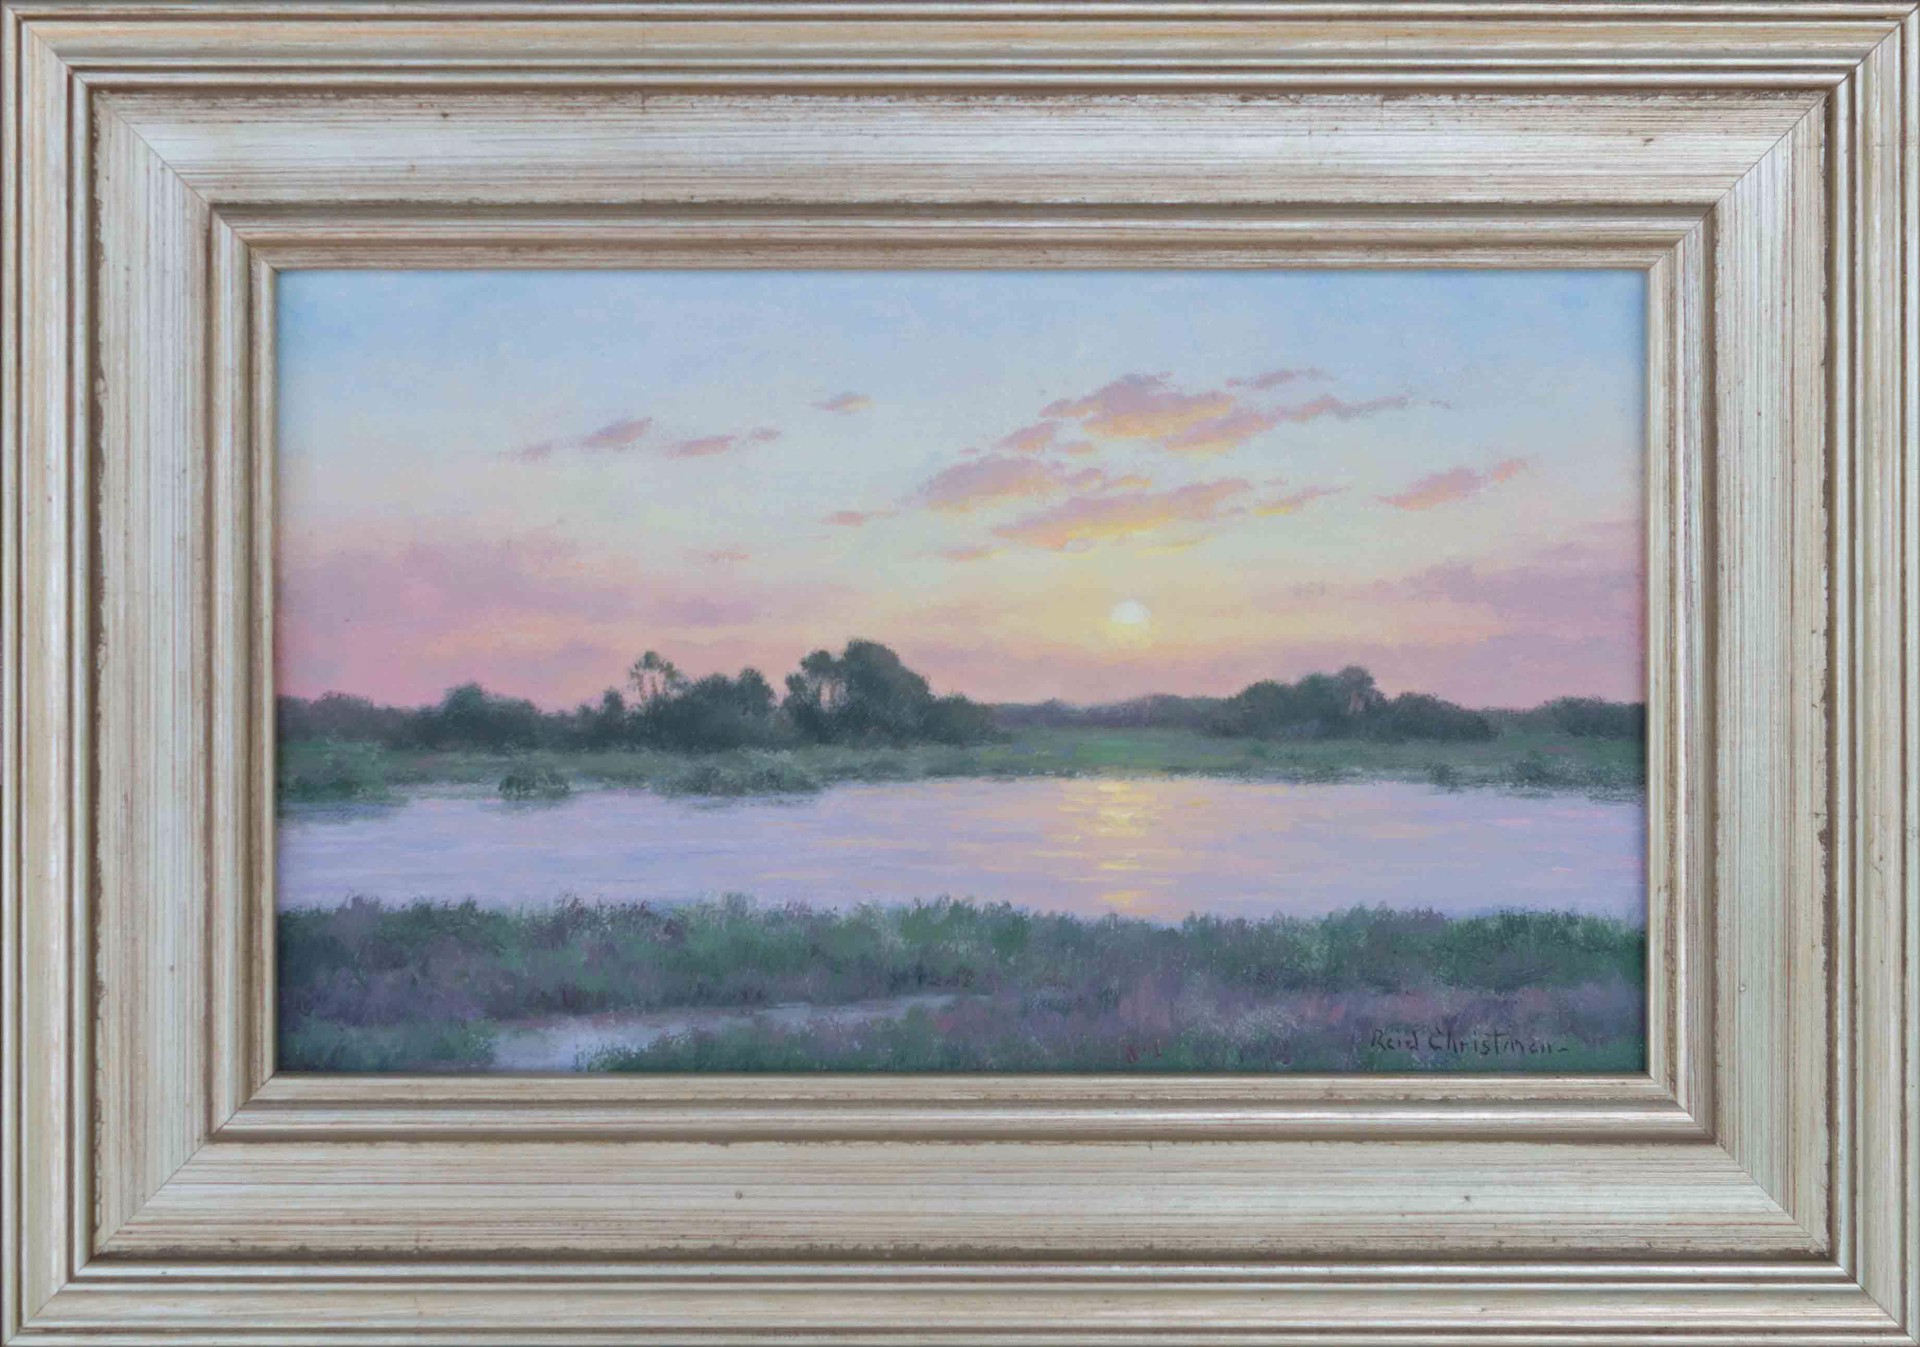 Evening Marsh by Reid Christman